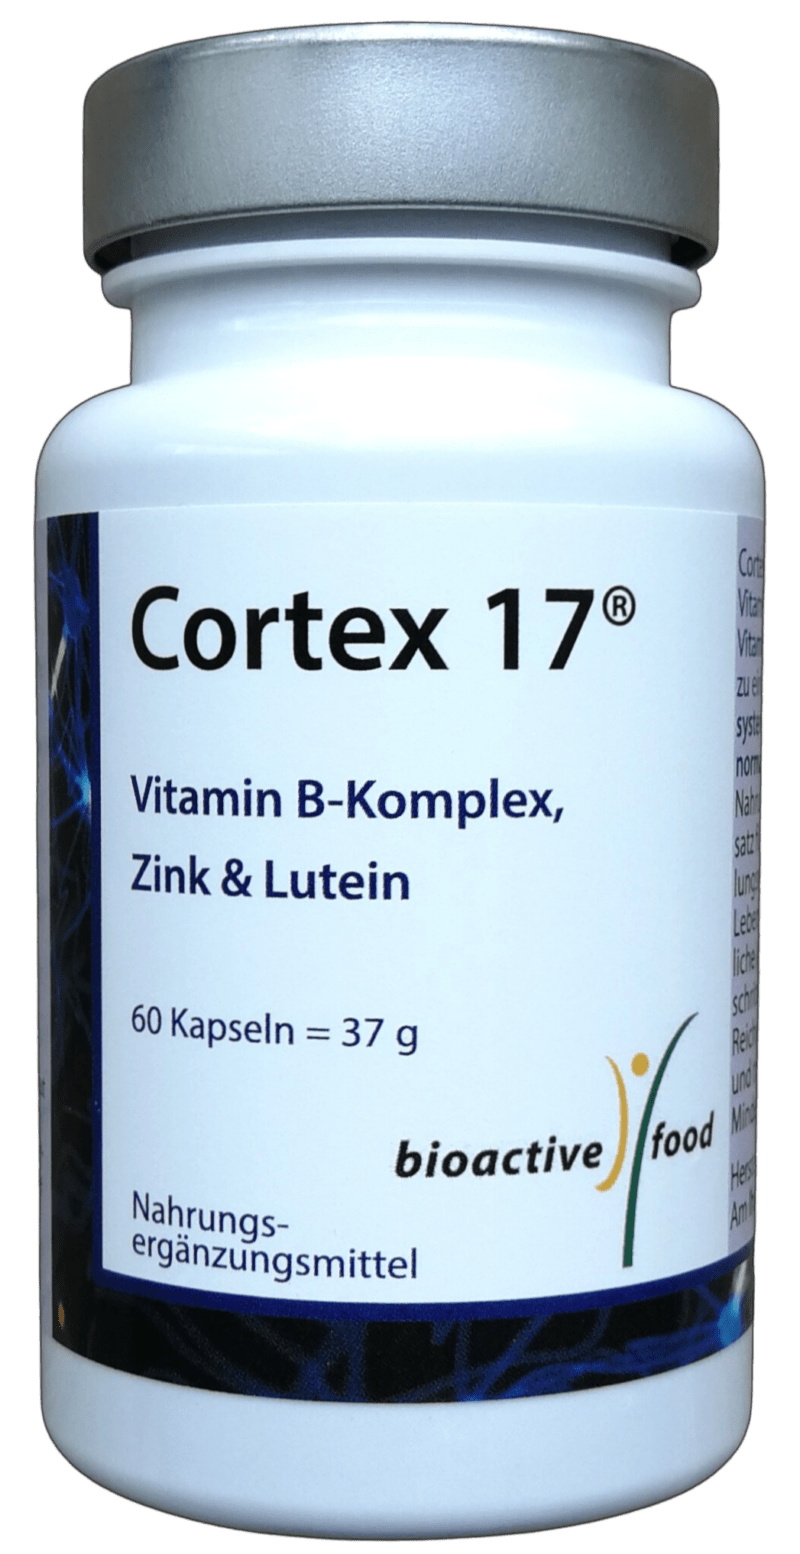 Cortex 17